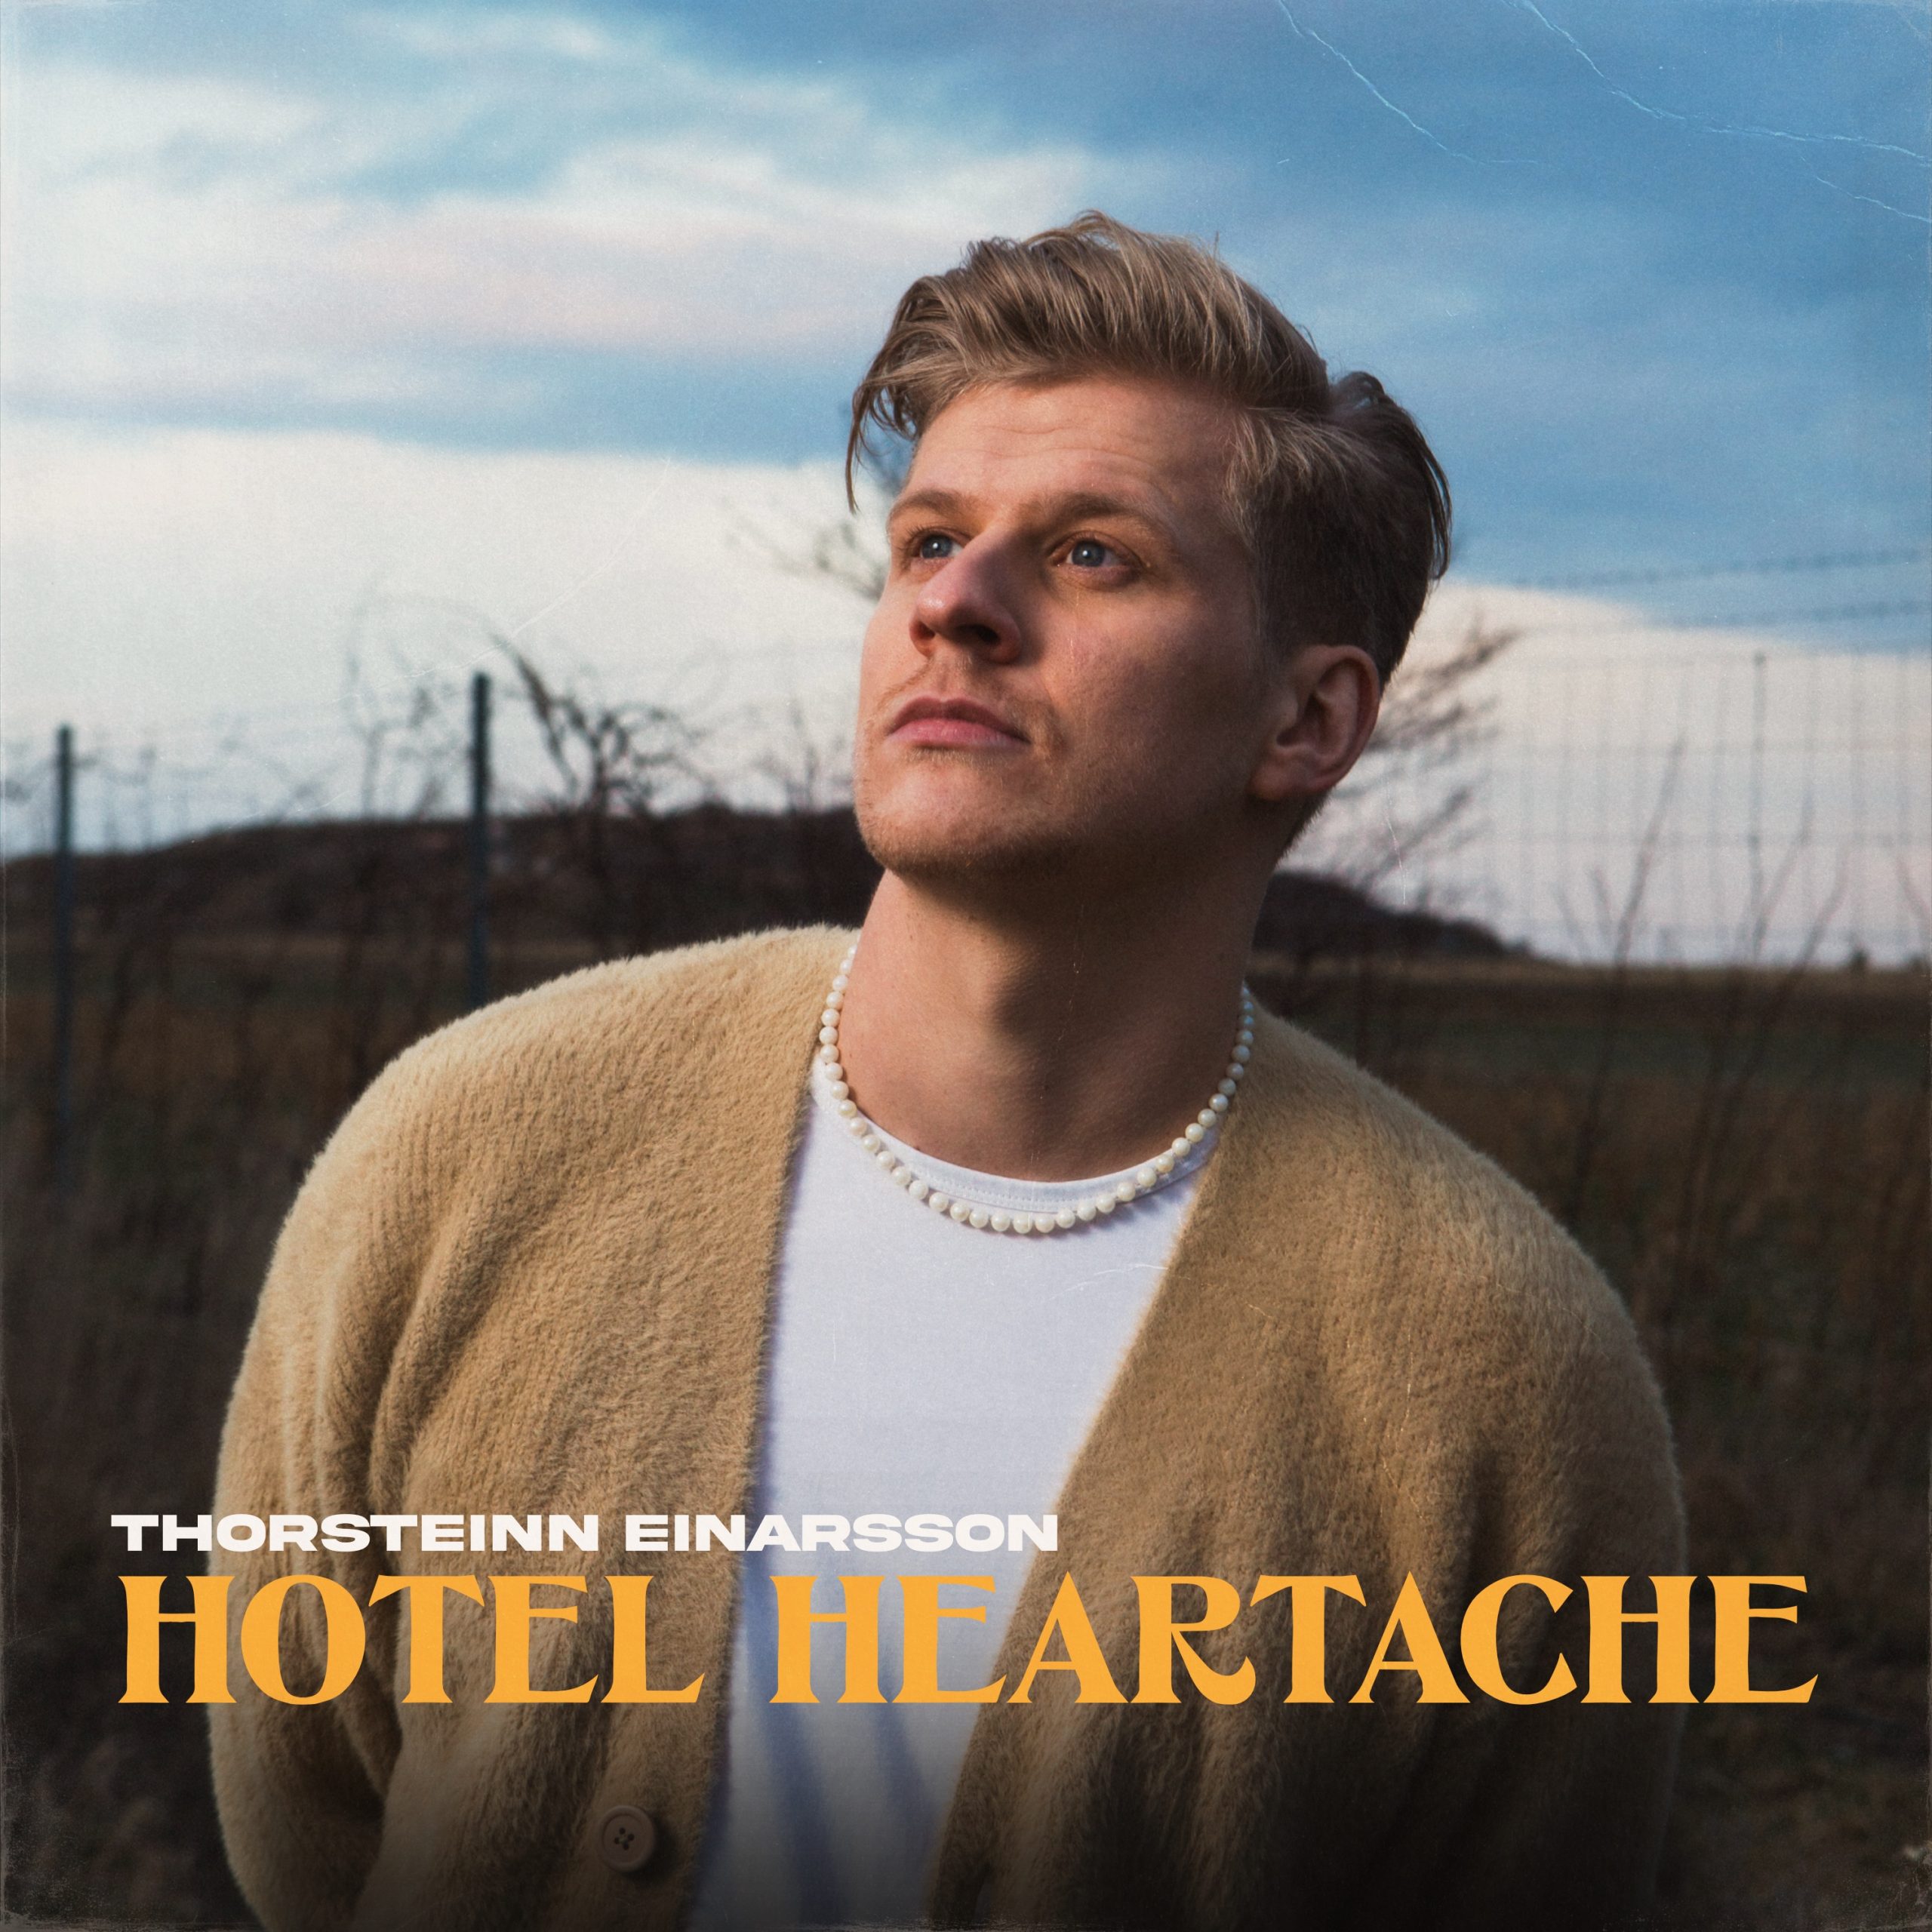 You are currently viewing SuperNova: Thorsteinn Einarsson – Hotel Heartache (26.03)